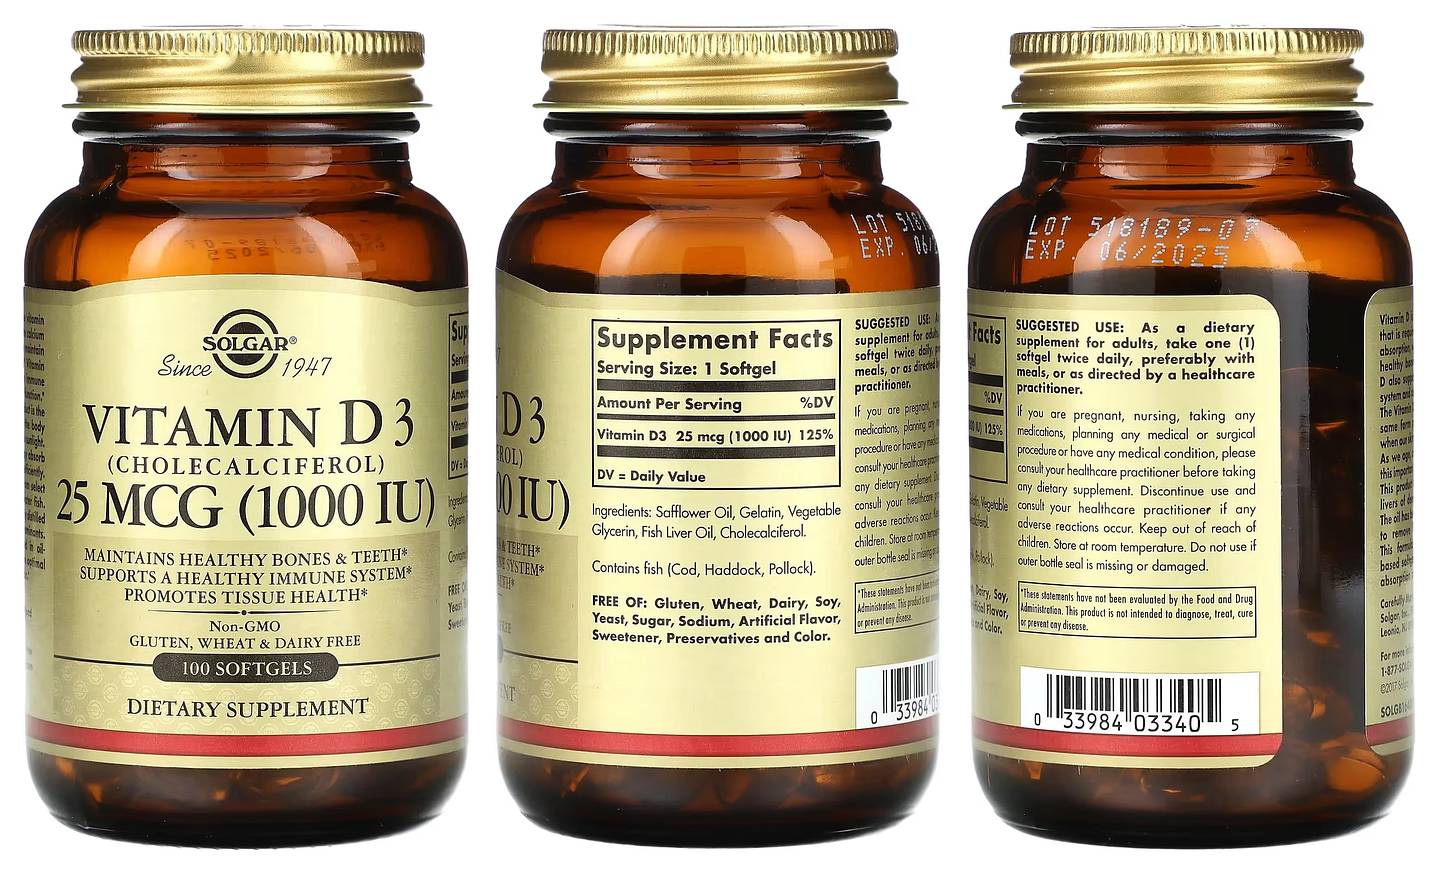 Solgar, Vitamin D 3 (Cholecalciferol) packaging